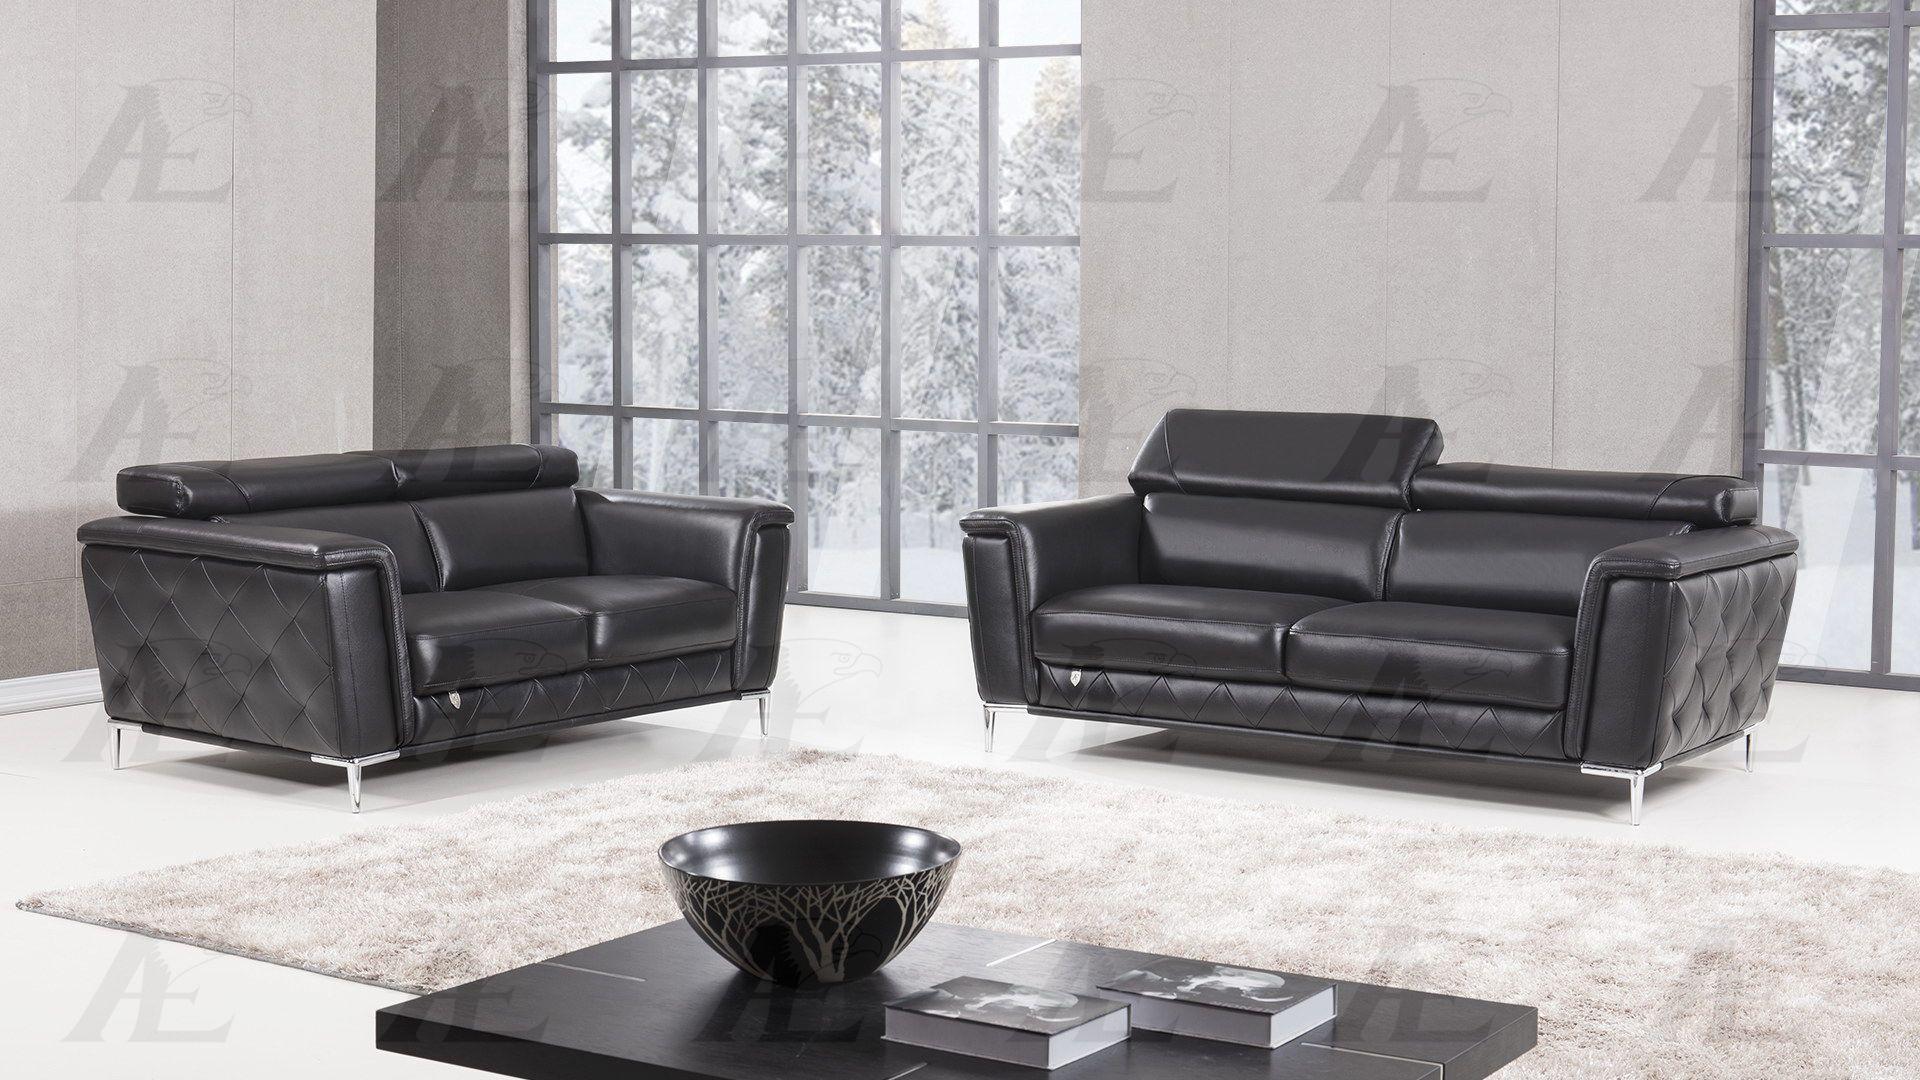 

    
EK071-BK-Set-2 Black Top Grain Italian Leather Tufted Sofa Set 2Pc EK071-BK American Eagle
